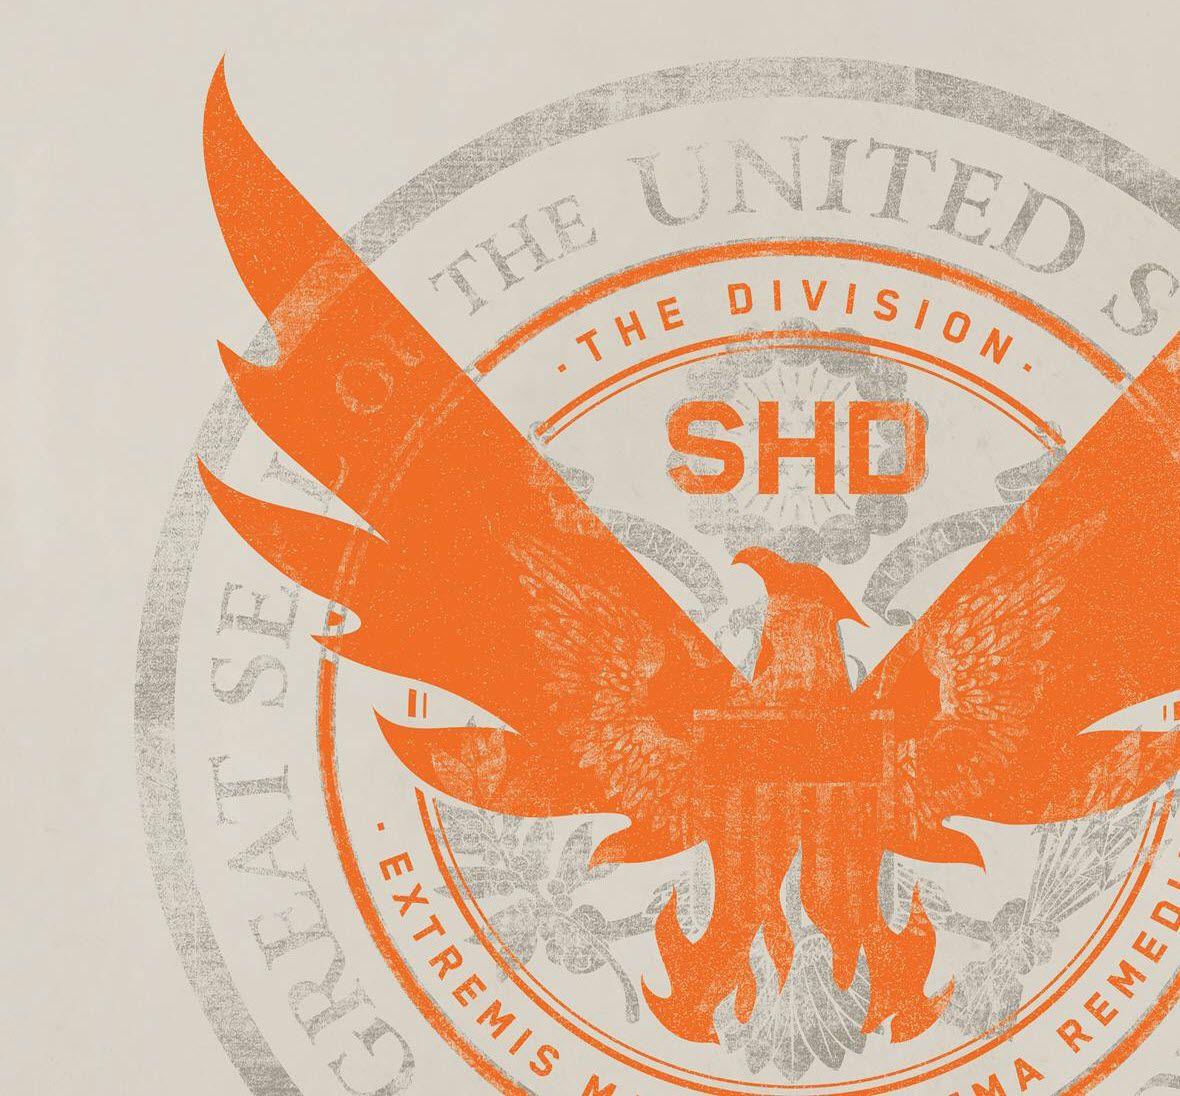 Tom Clancy's the Division Logo - SDCC '18: Dark Horse Announces TOM CLANCY'S THE DIVISION Art Book ...